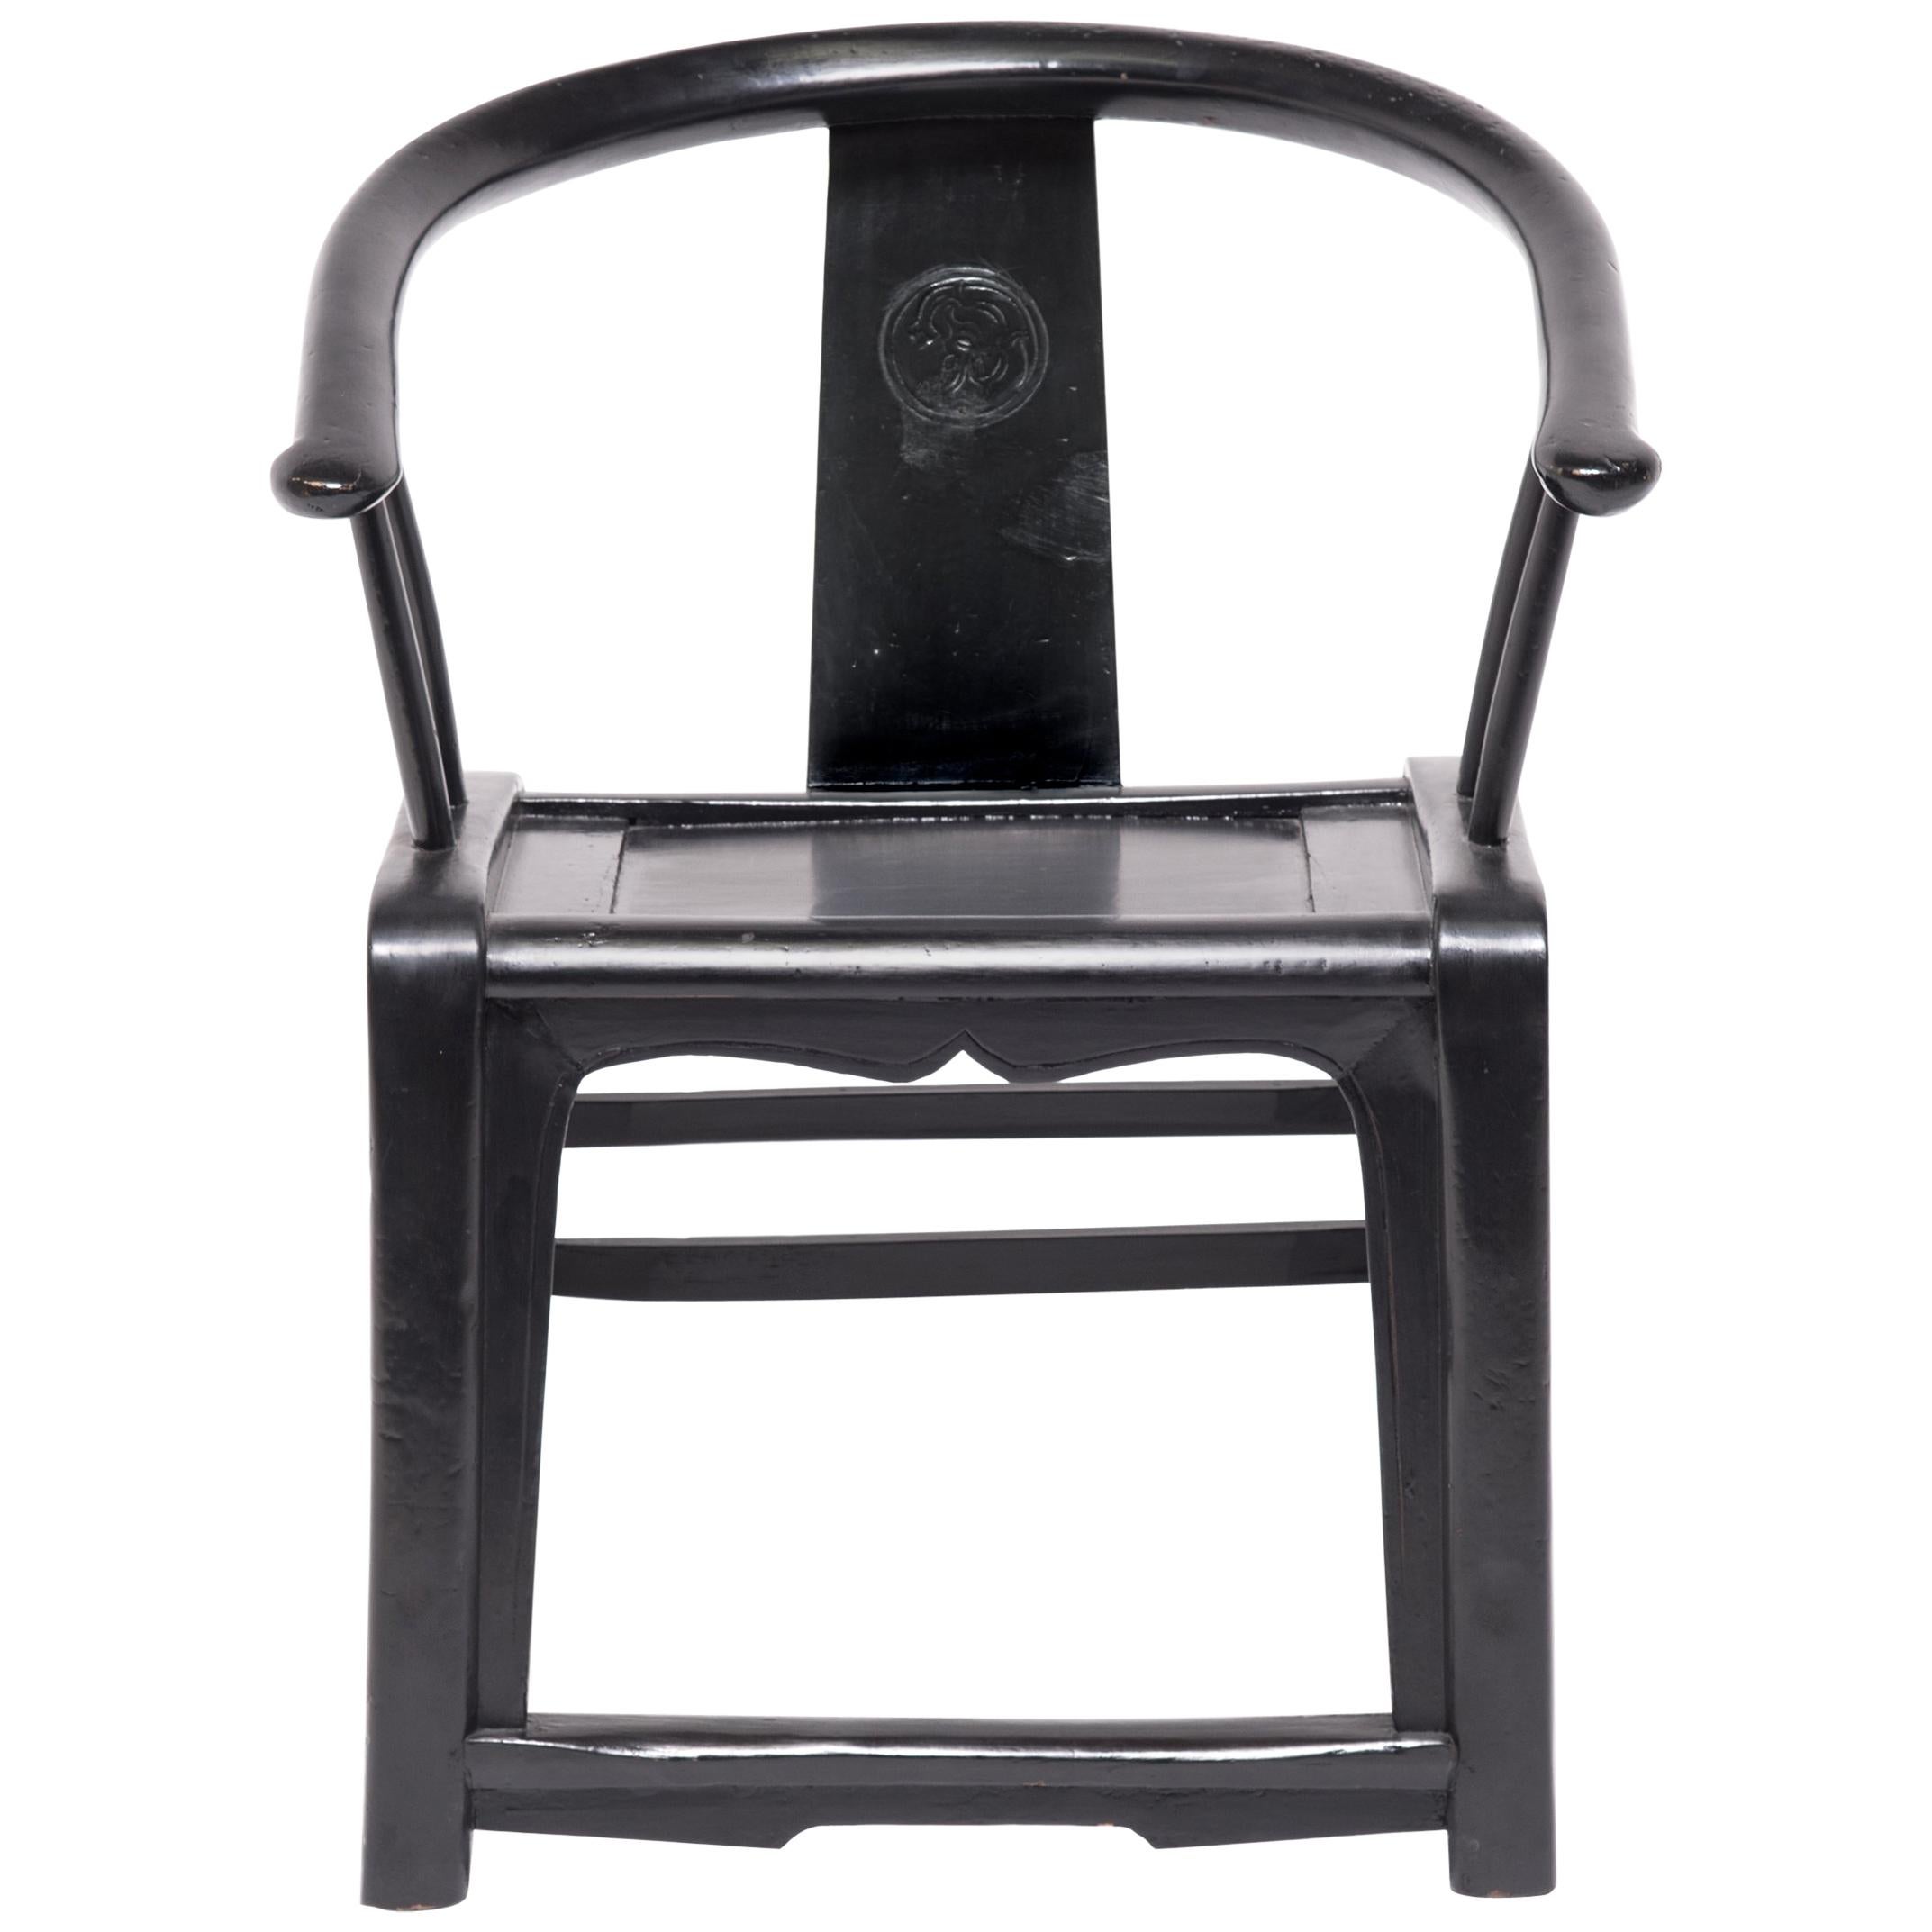 Chinese Black Roundback Chair, c. 1850